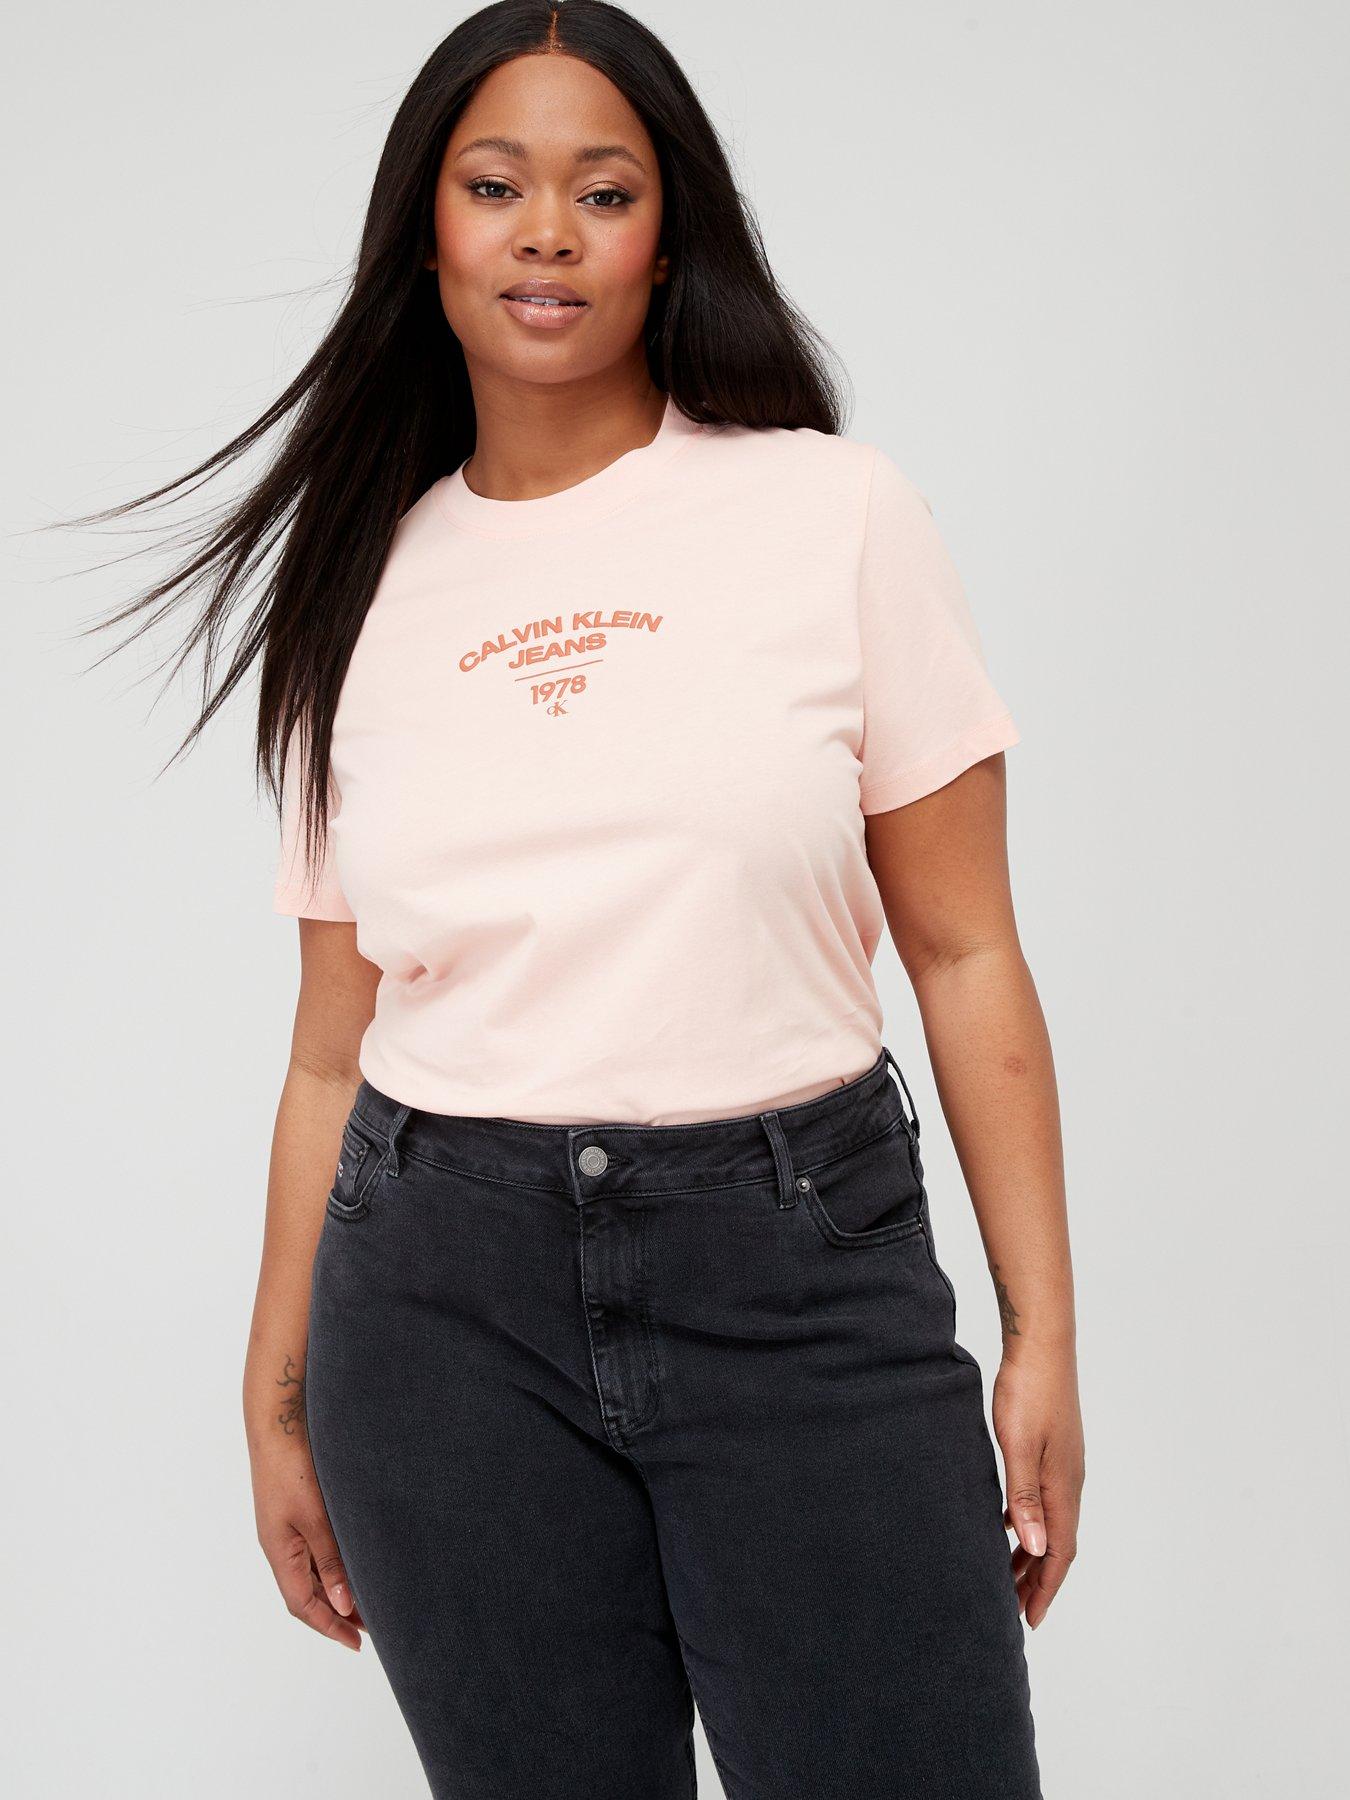 Short Sleeve | Calvin klein jeans | Tops & t-shirts | Women | Very Ireland | T-Shirts